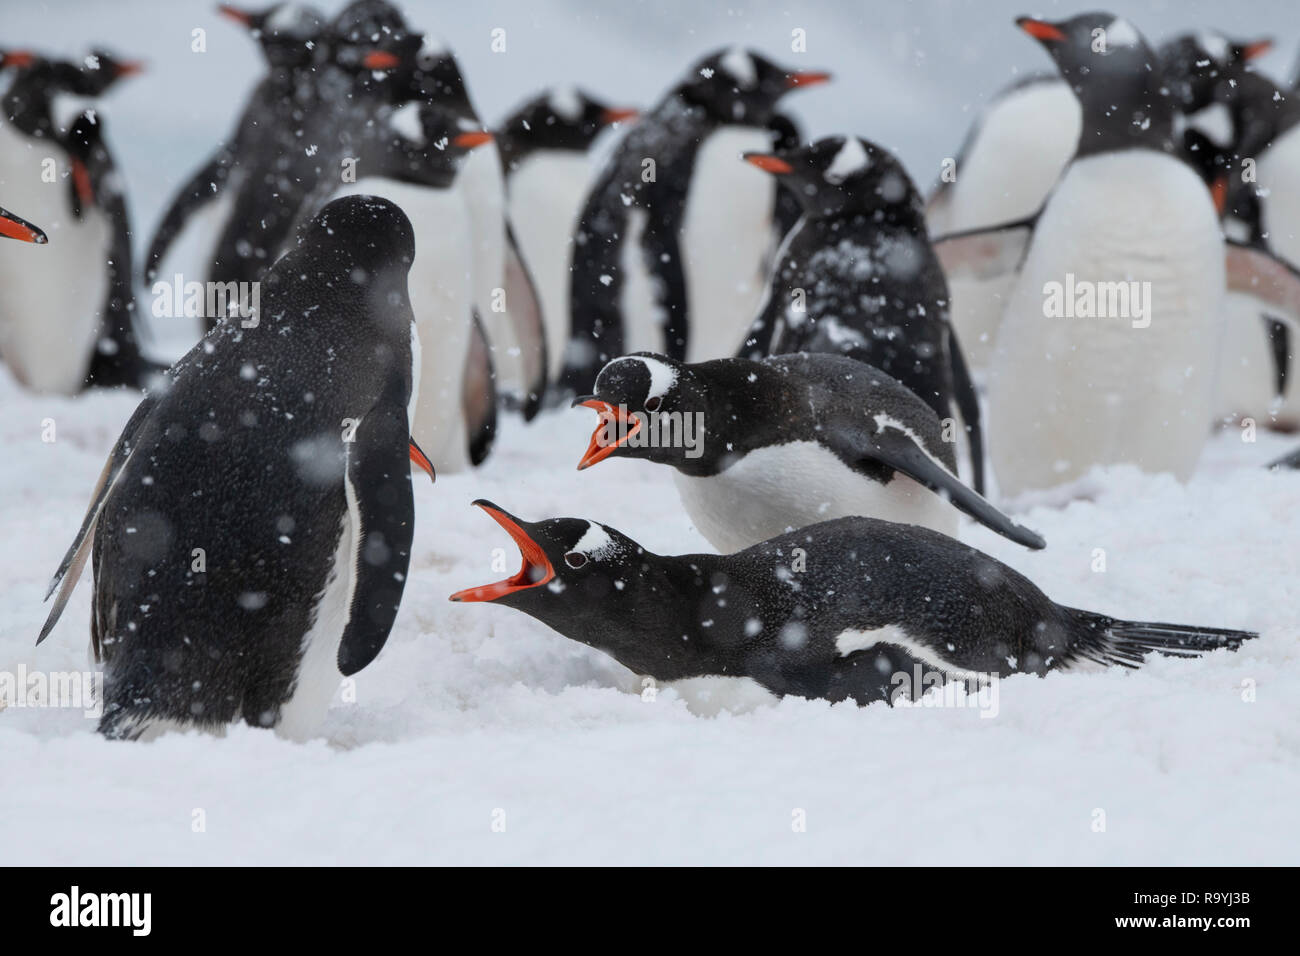 Antarktis, errera Channel, Danco Island. Nesting Gentoo Pinguine im Schnee Sturm. Stockfoto